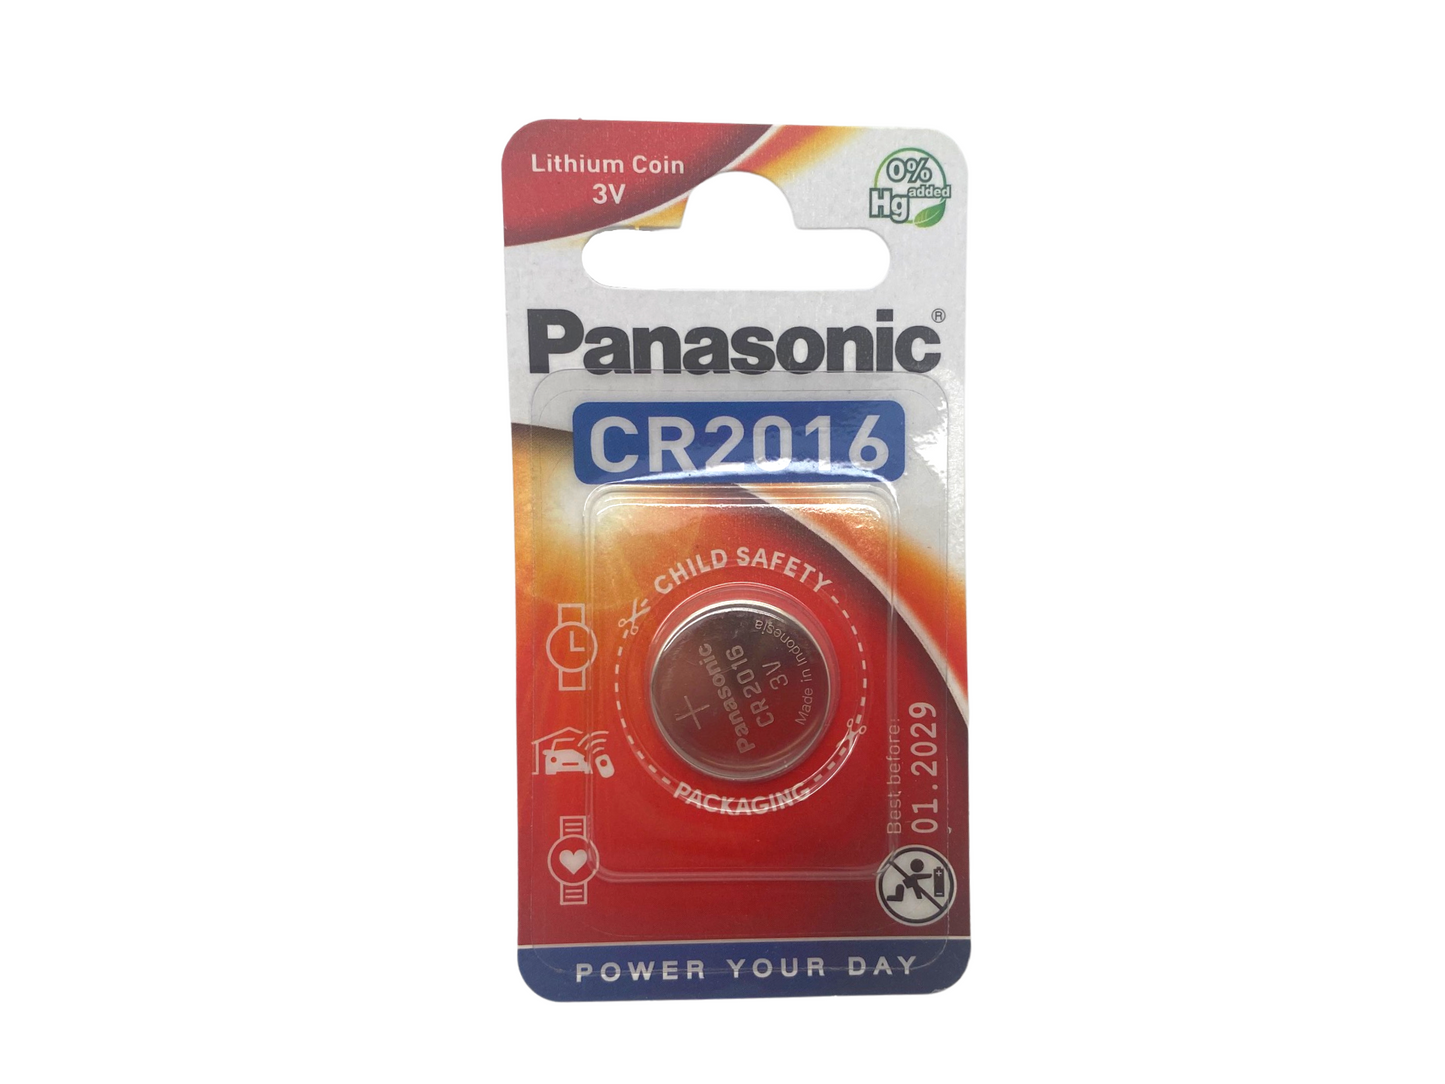 Panasonic CR2016 Lithium Cell Battery